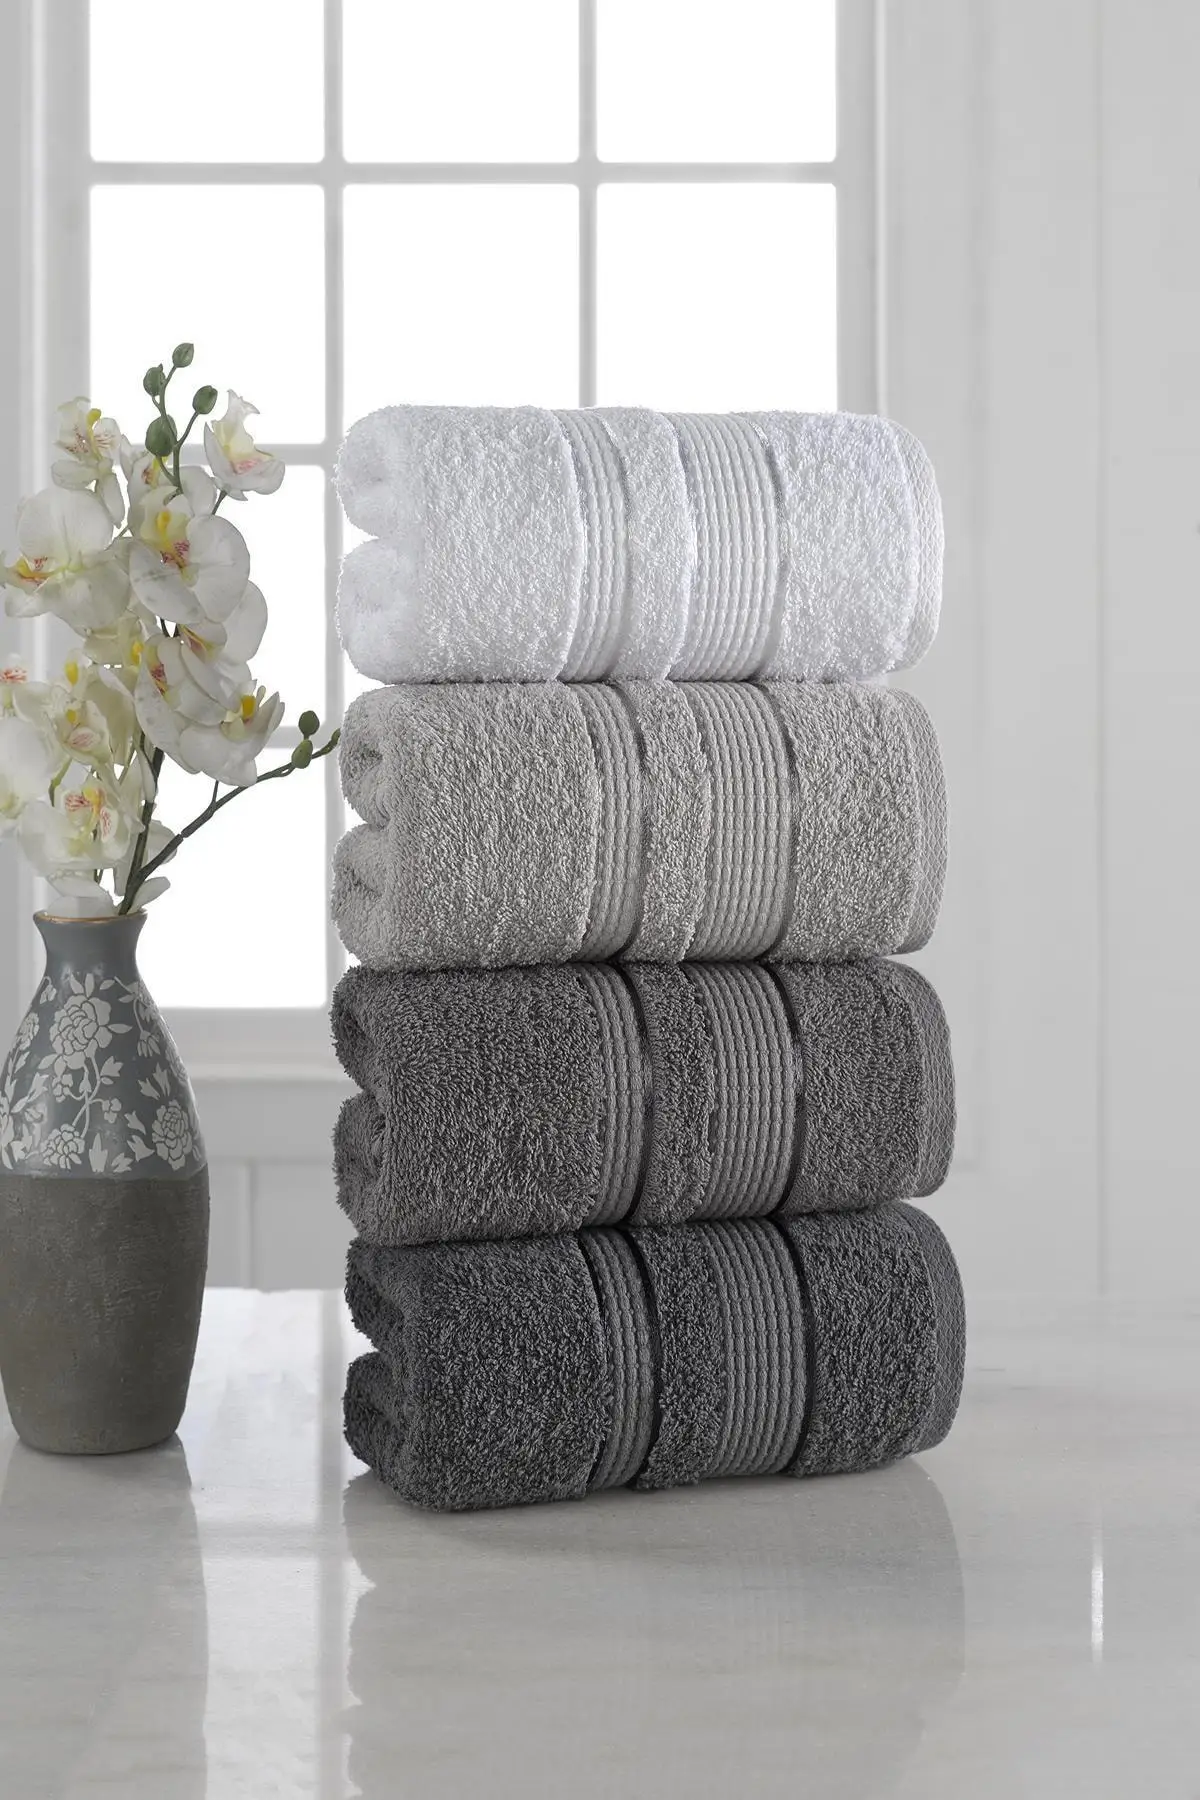 Home Textile Hand Face Towel 4 Pieces 50x85 Gray Colored Soft Cotton